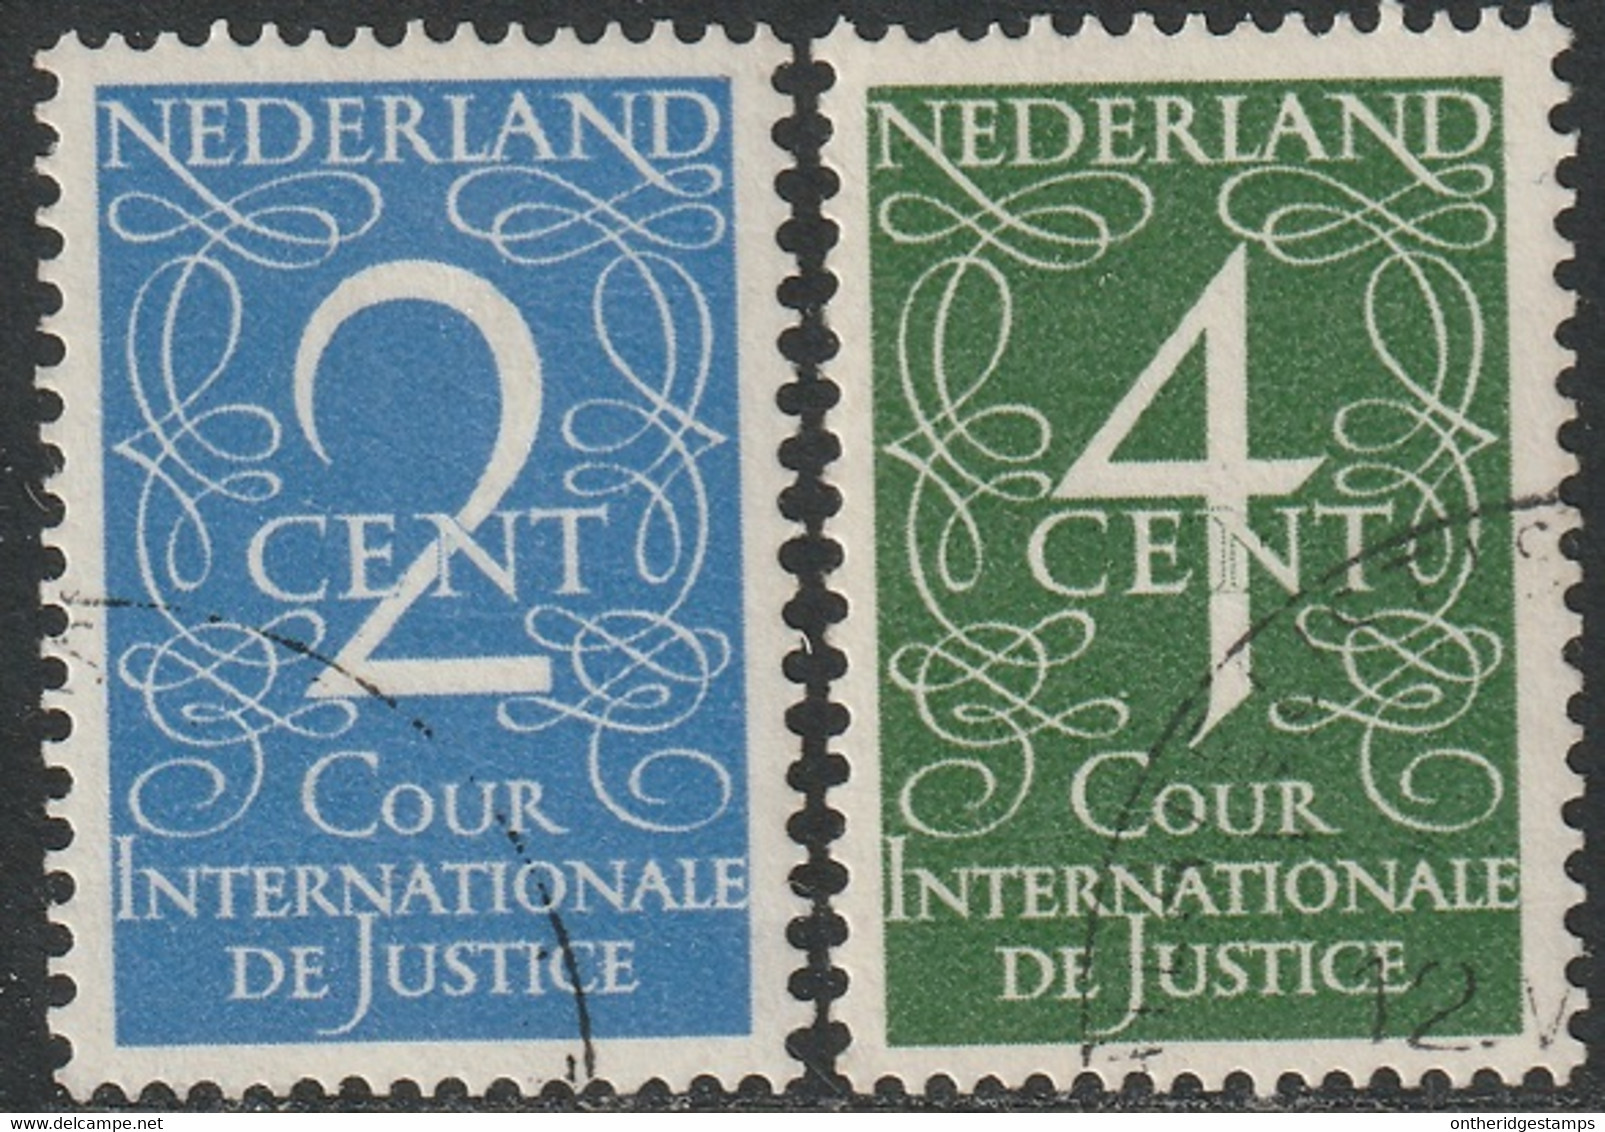 Netherlands 1950 Sc O25-6 NVPH D25-6 Official Set CTO NH - Dienstzegels